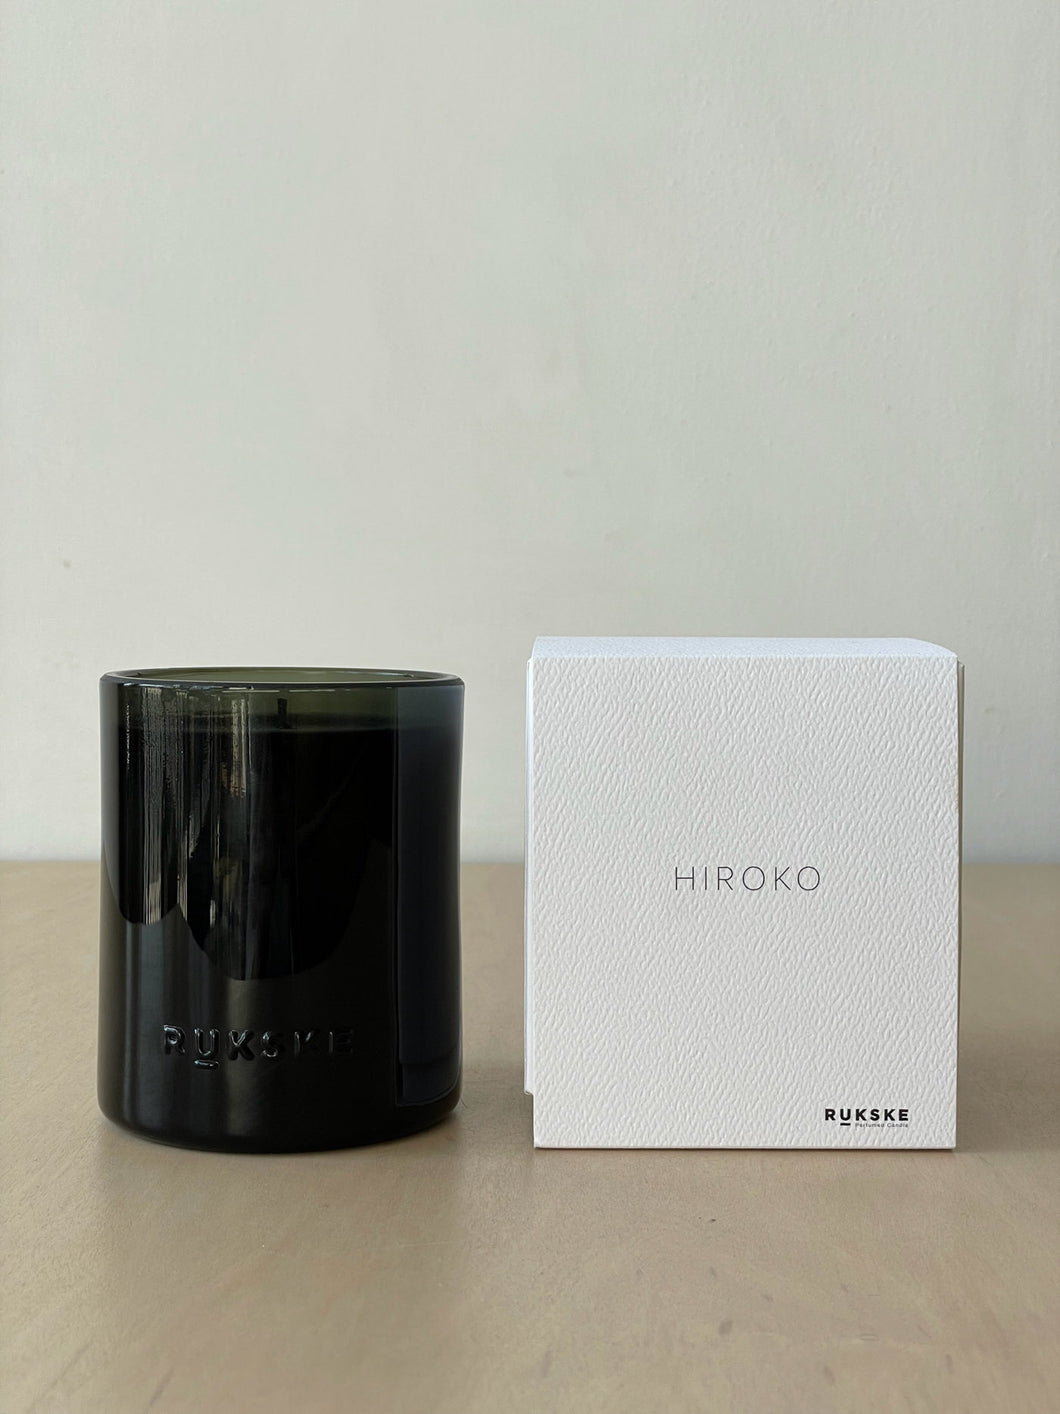 Hiroko Candle by Rukske